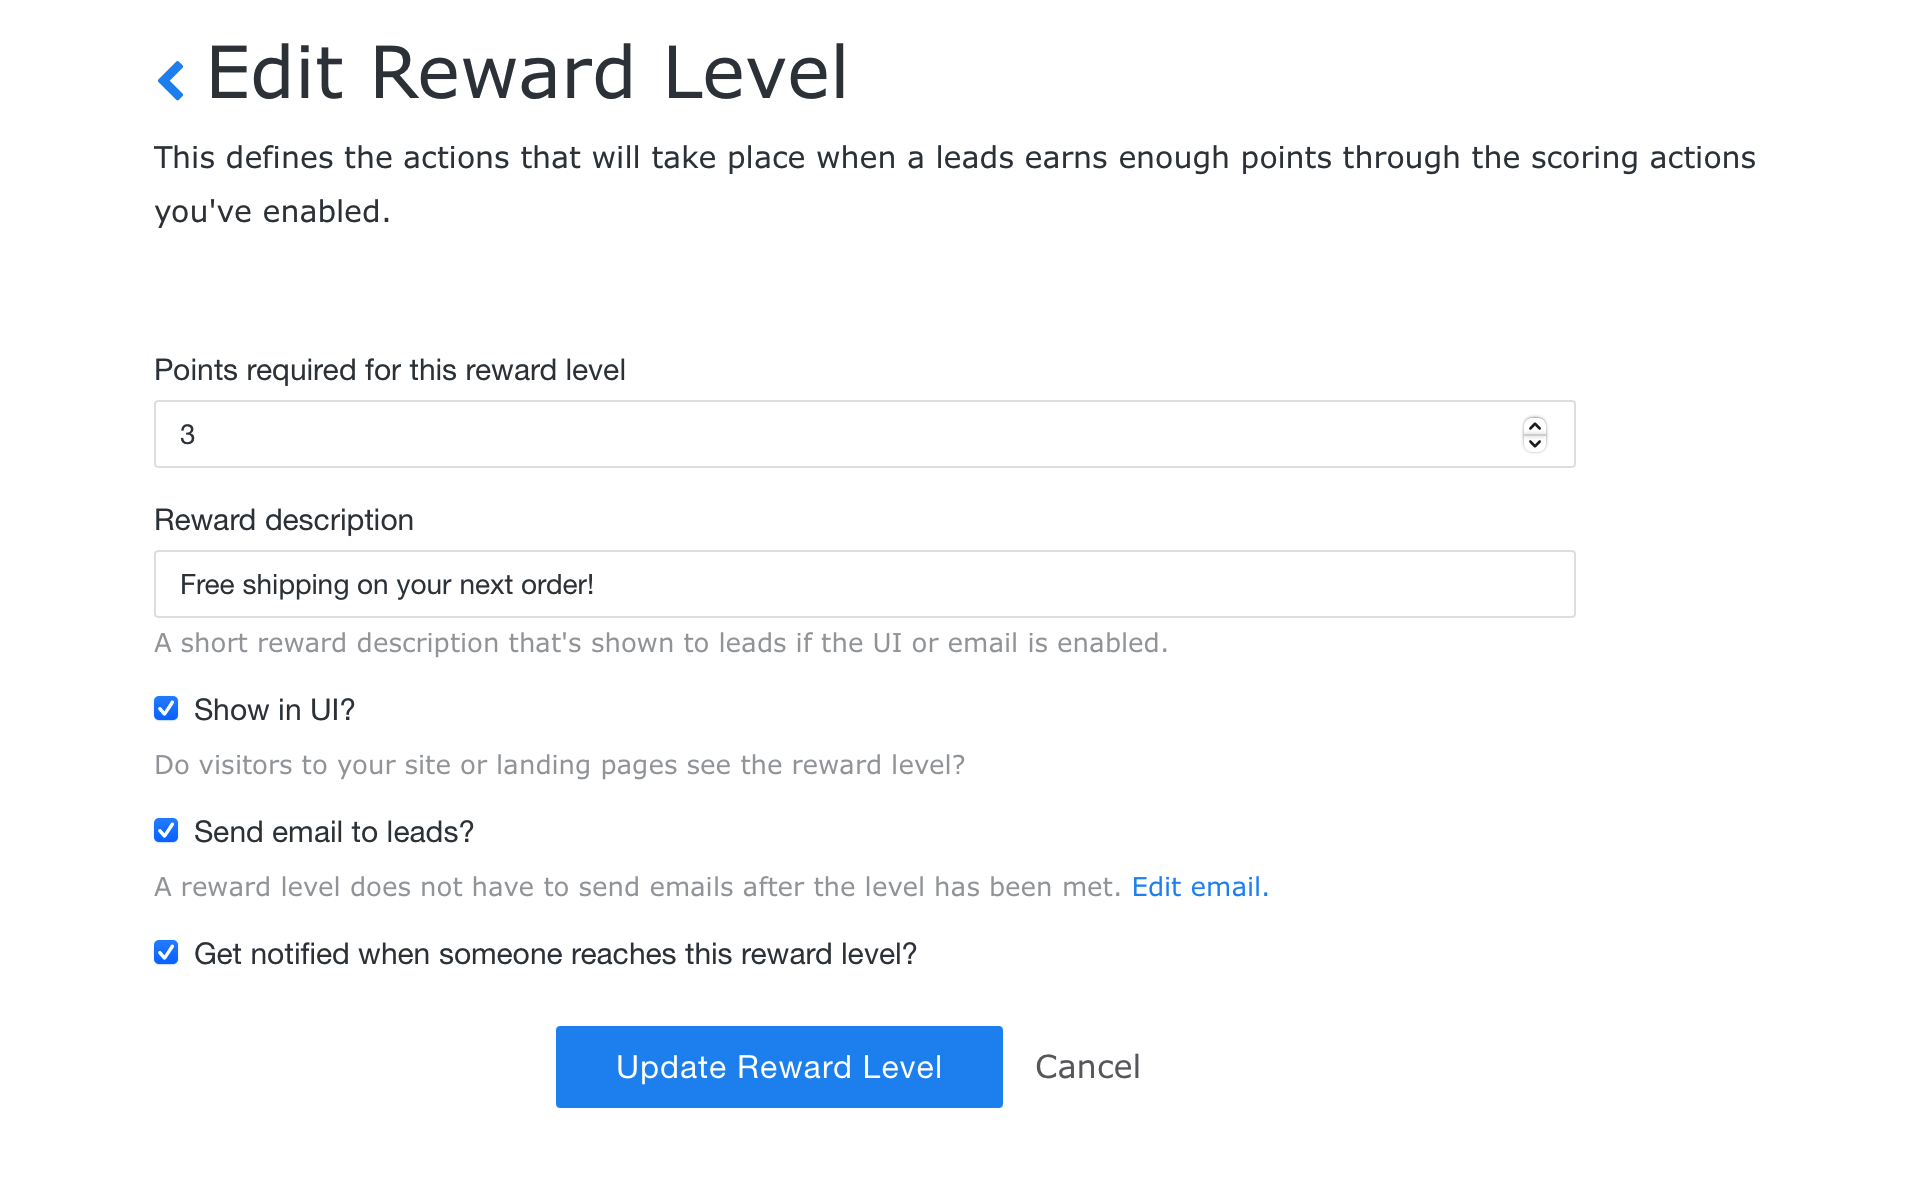 Edit reward Level